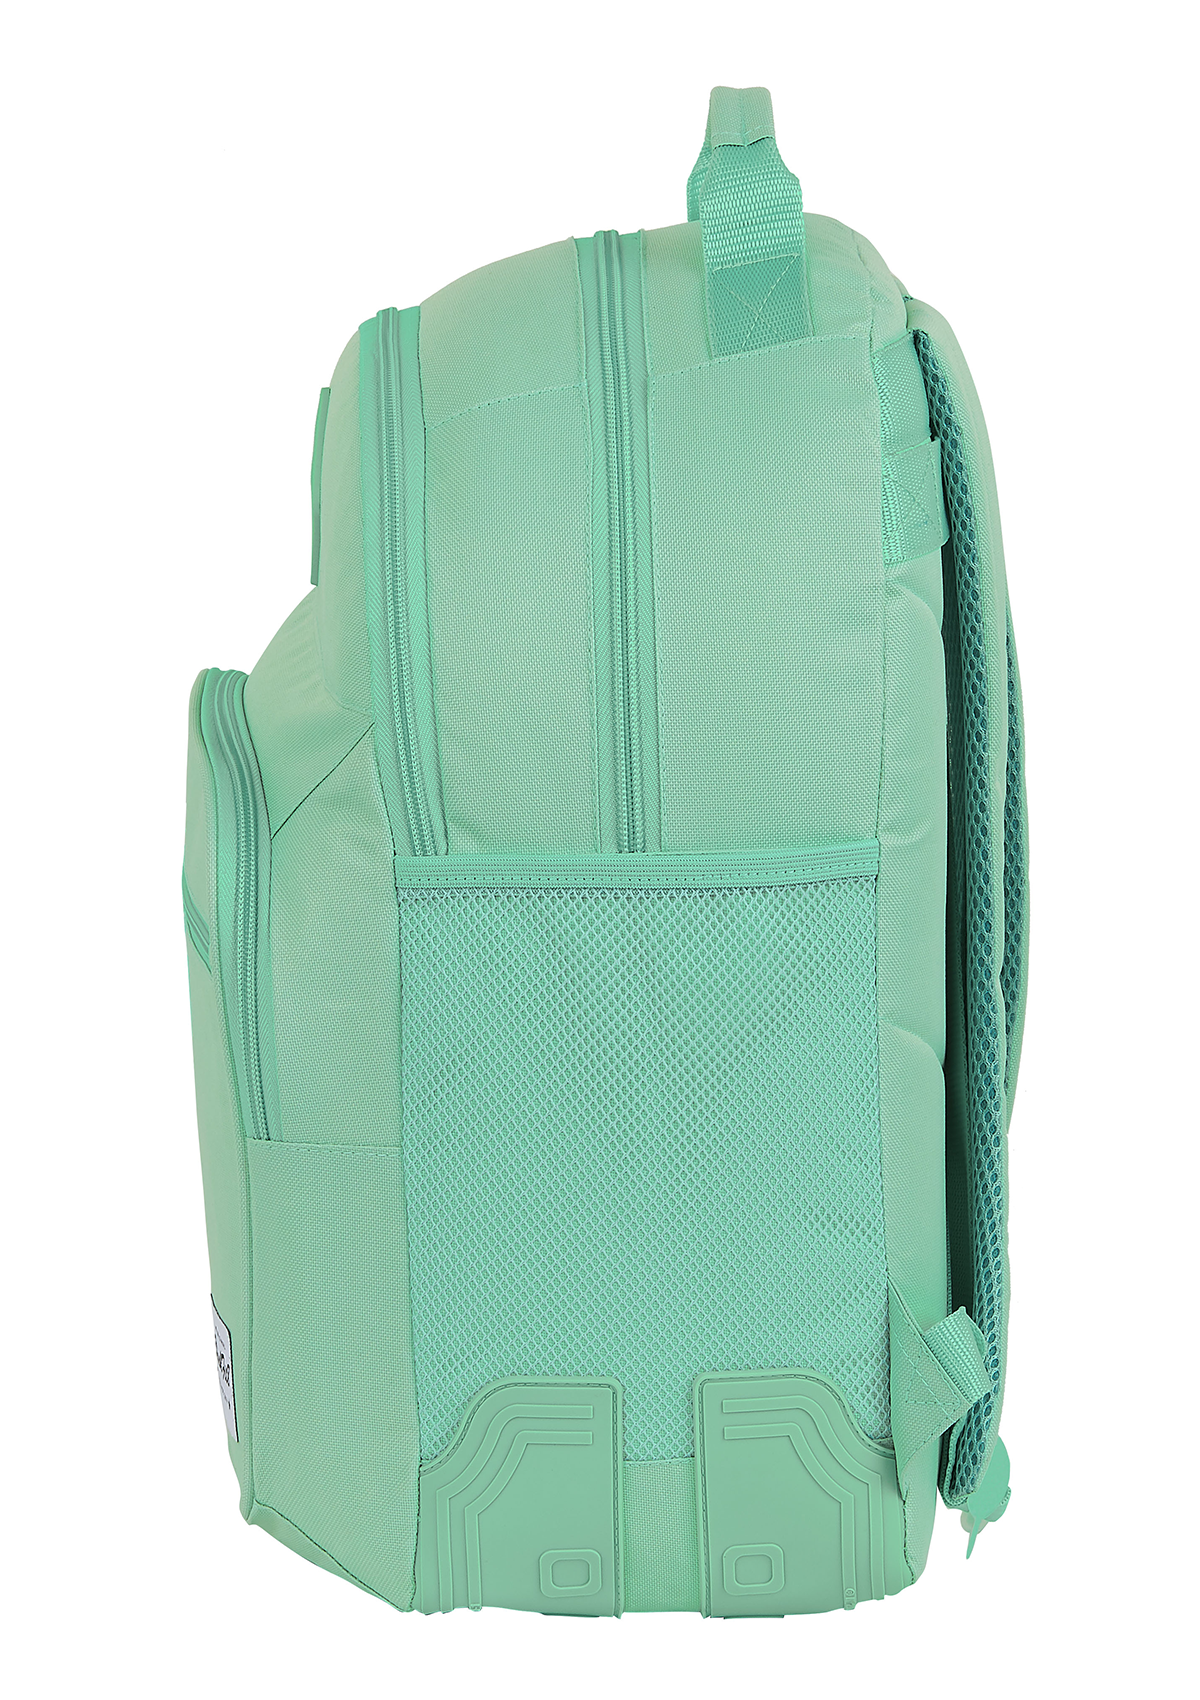 Blackfit8 Double Backpack Turquoise